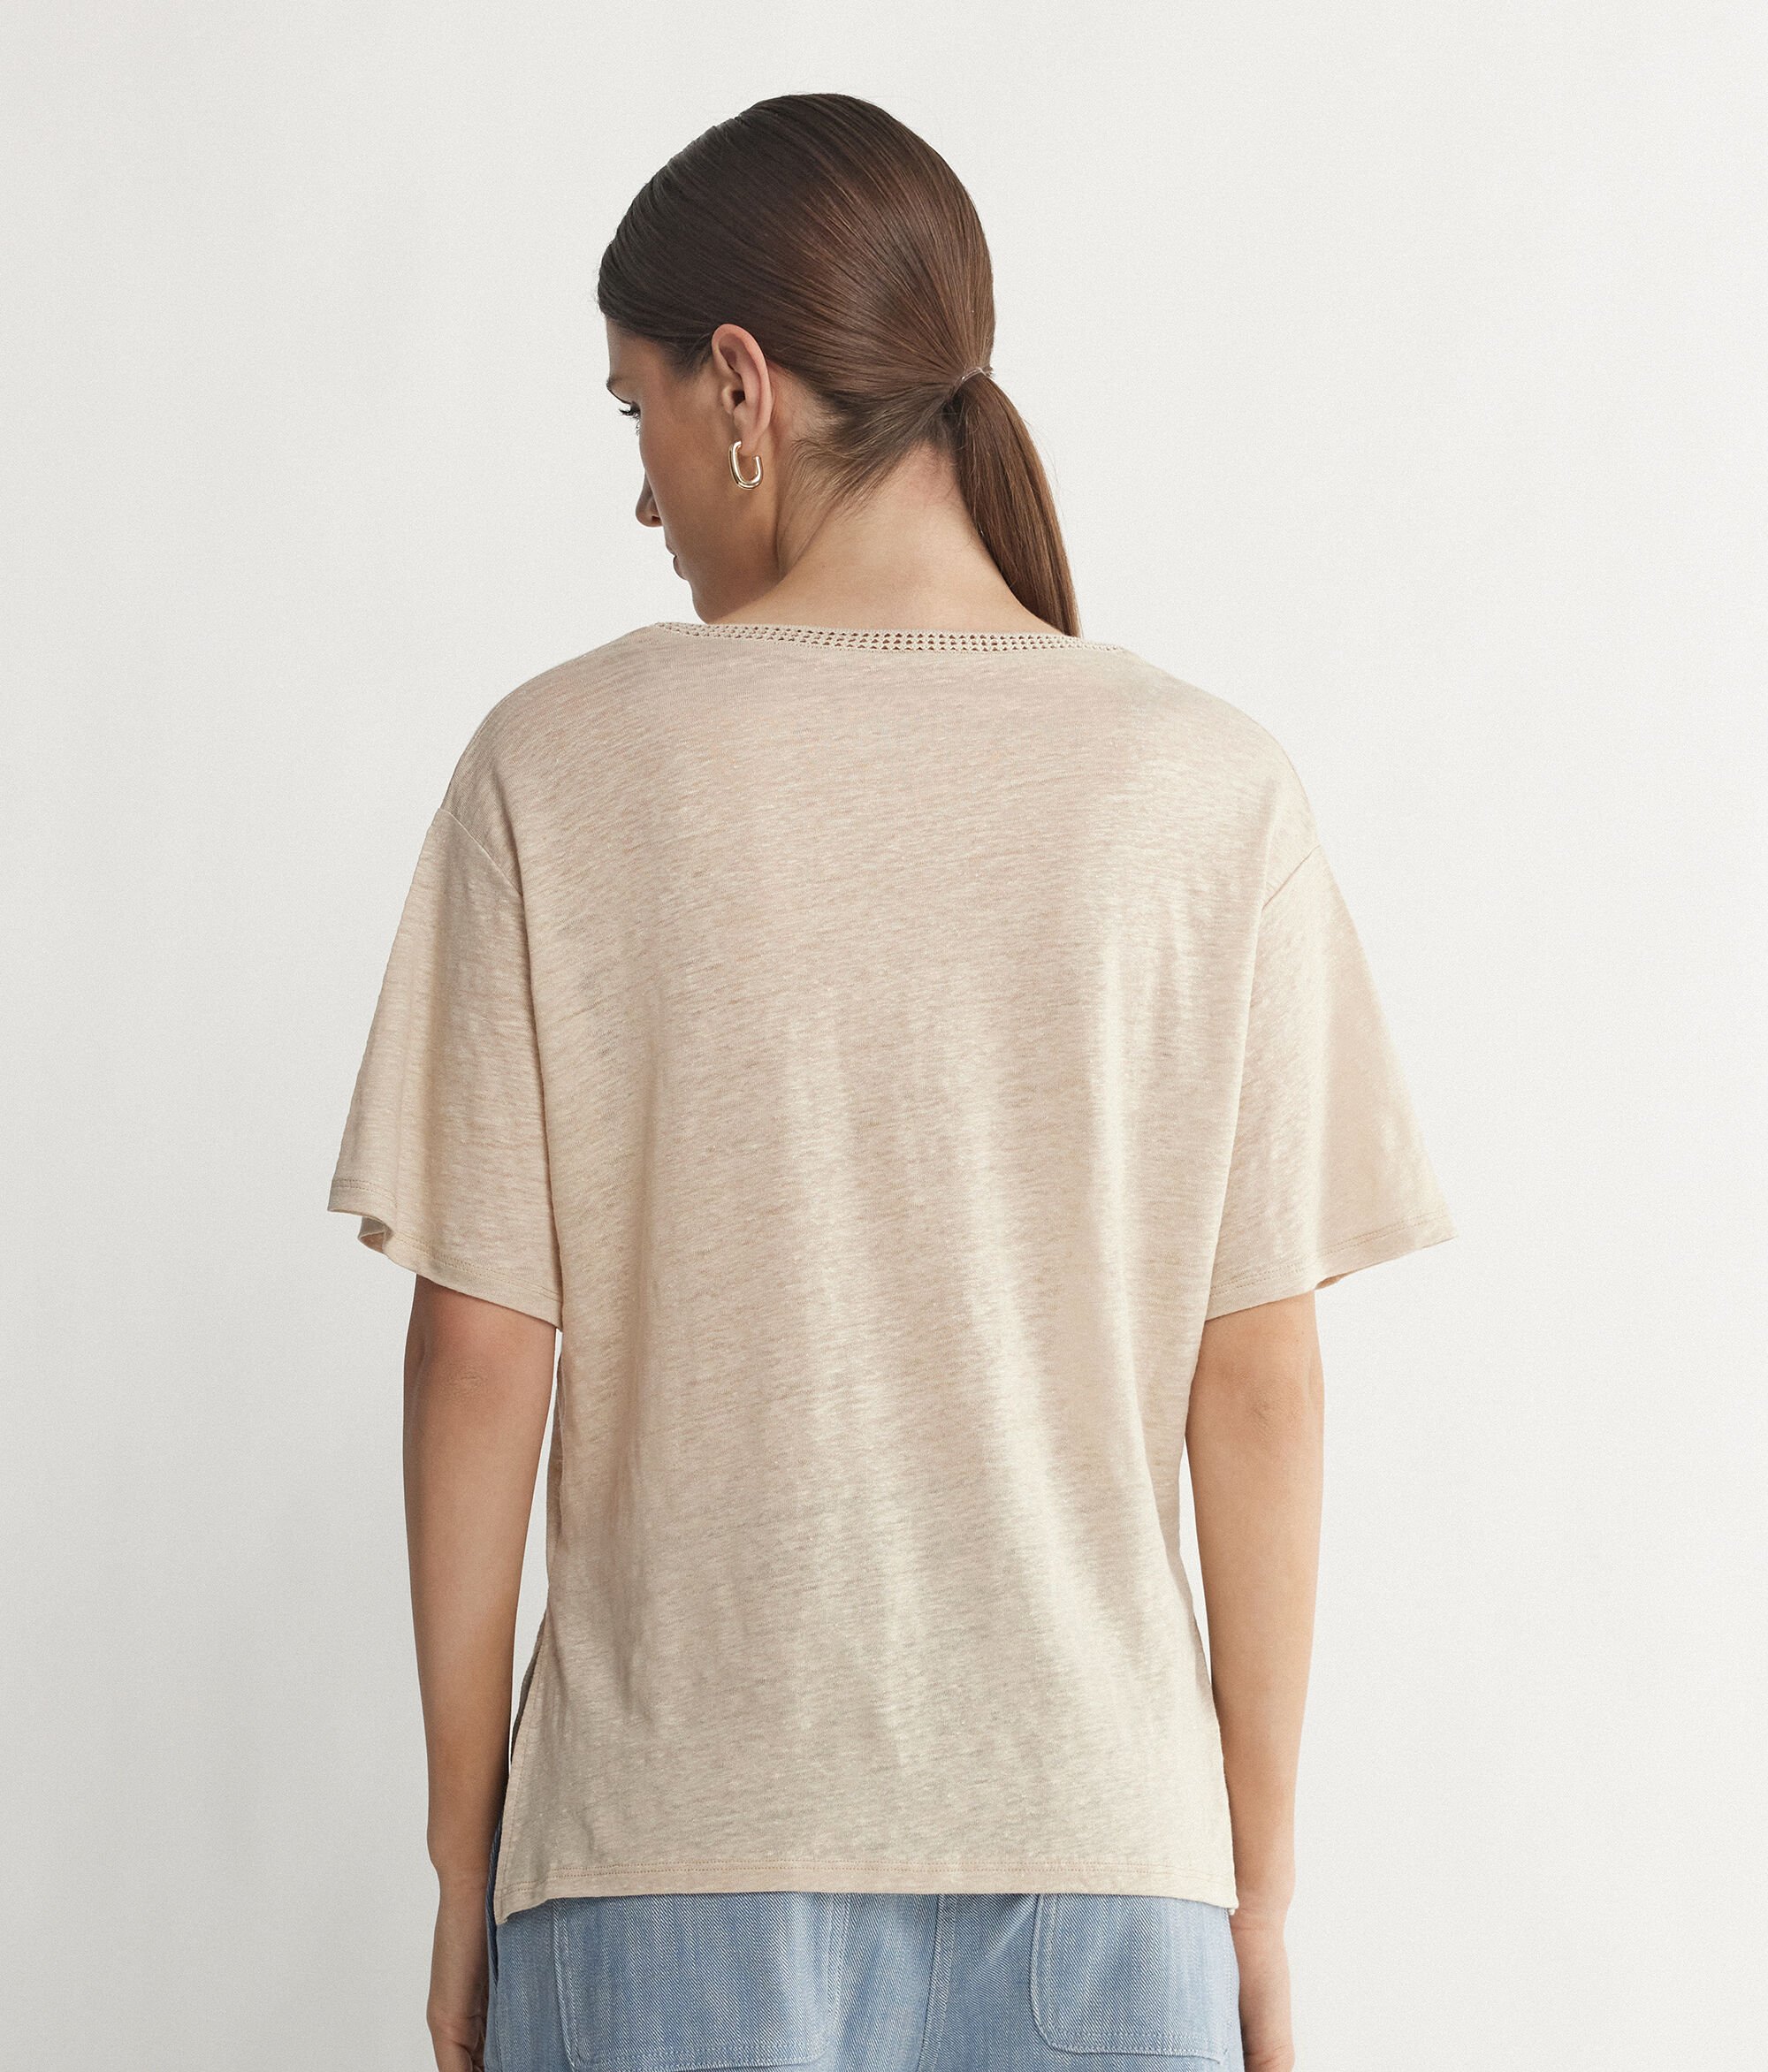 V-Neck Linen T-Shirt with Mesh Trim